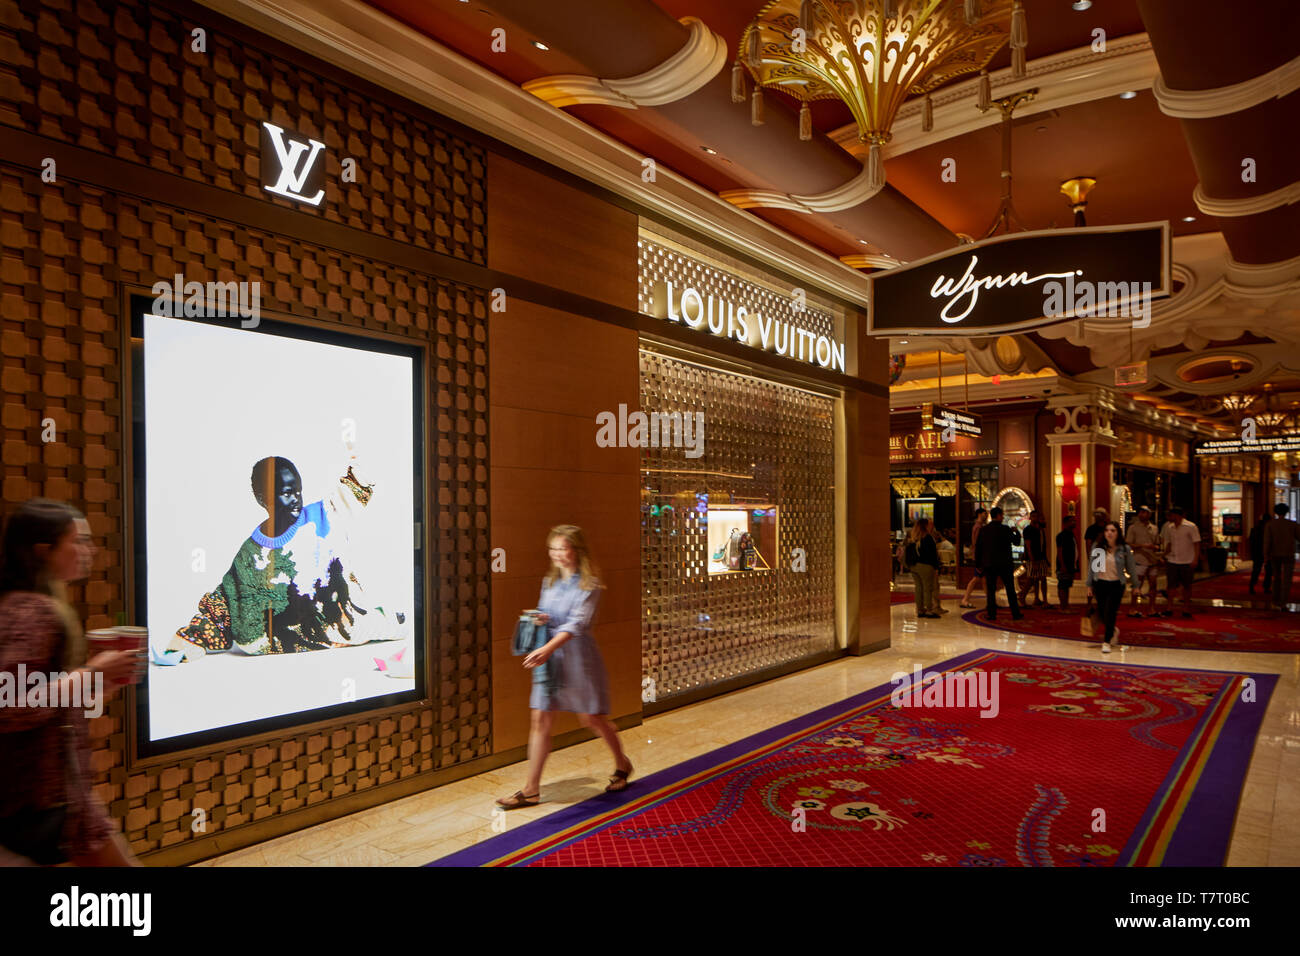 Louis Vuitton - Las Vegas, NV